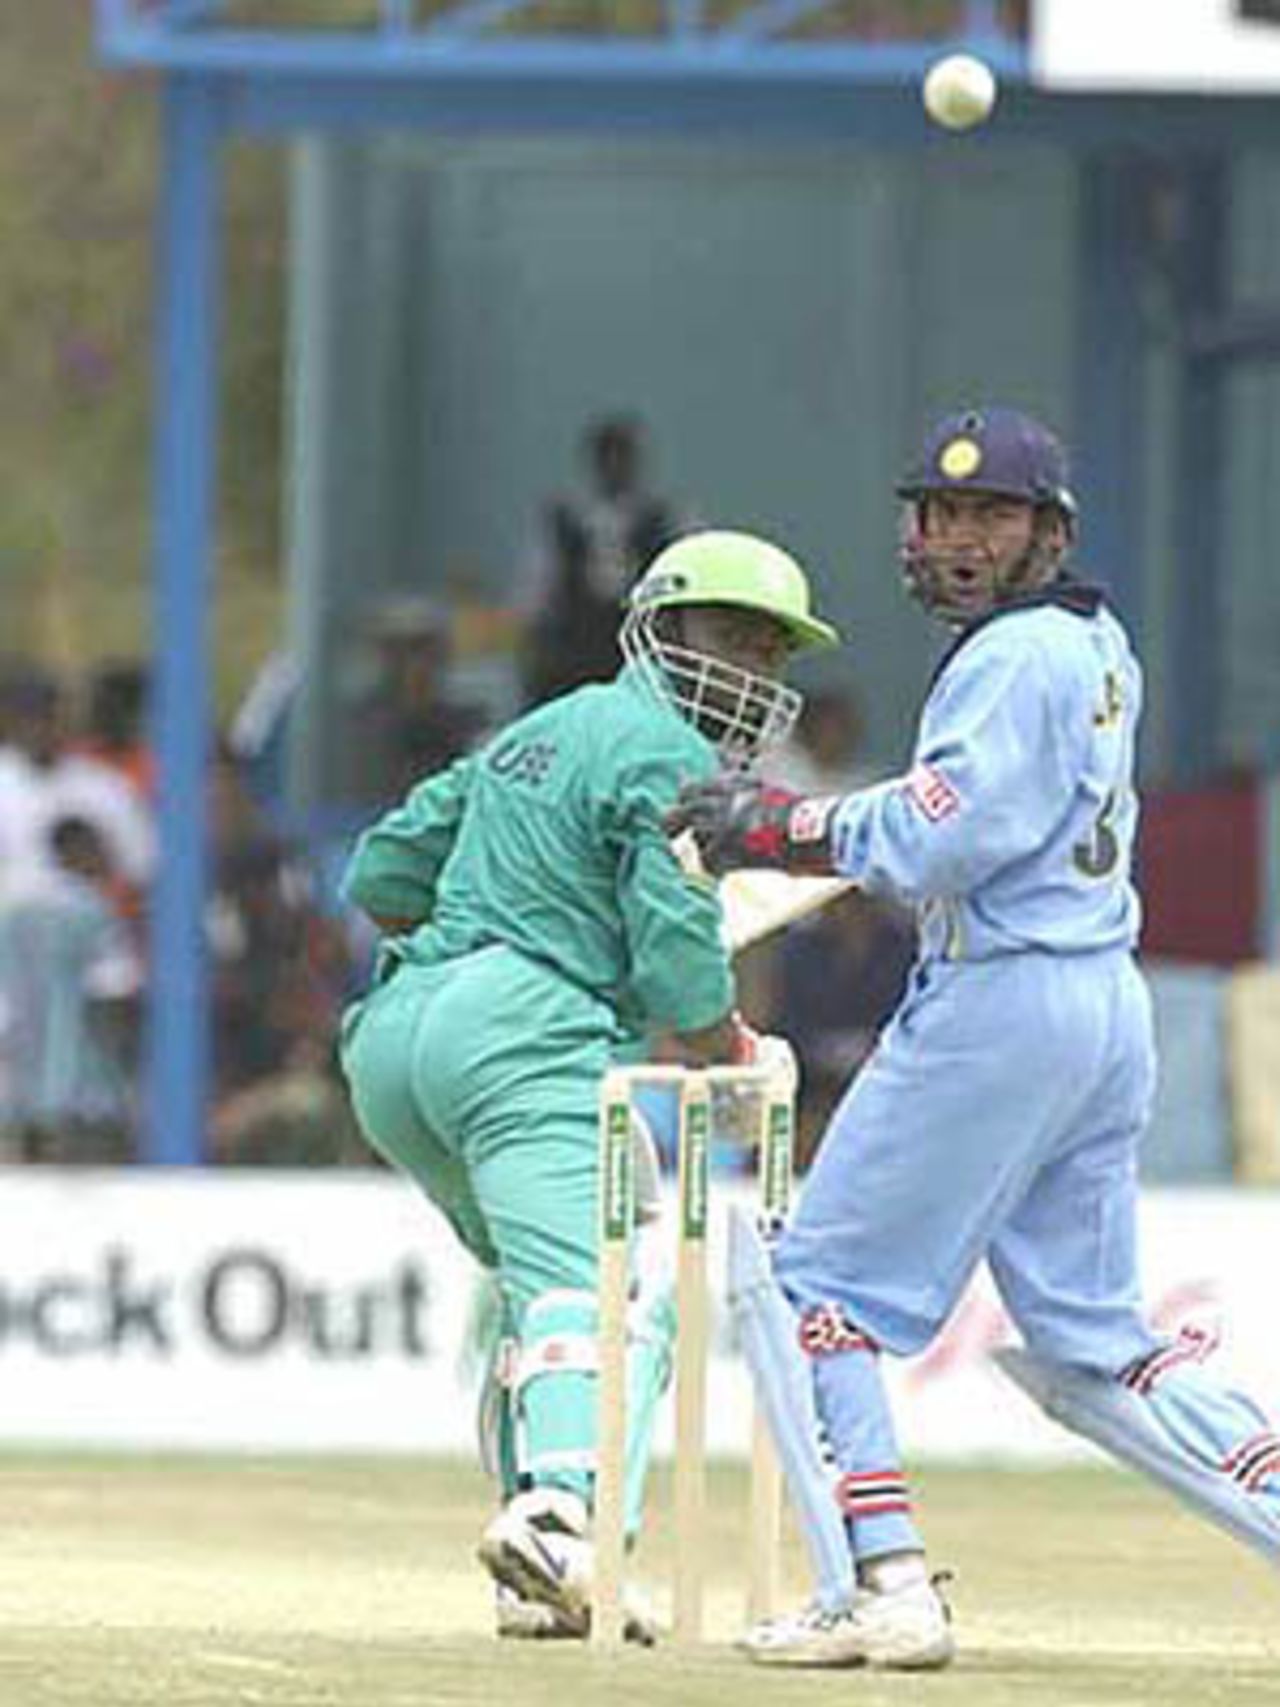 Dahiya looks back as an edge from a Kenyan batsman goes abegging, ICC KnockOut, 2000/01, Preliminary Quarter Final, Kenya v India, Gymkhana Club Ground, Nairobi, 3 October 2000.